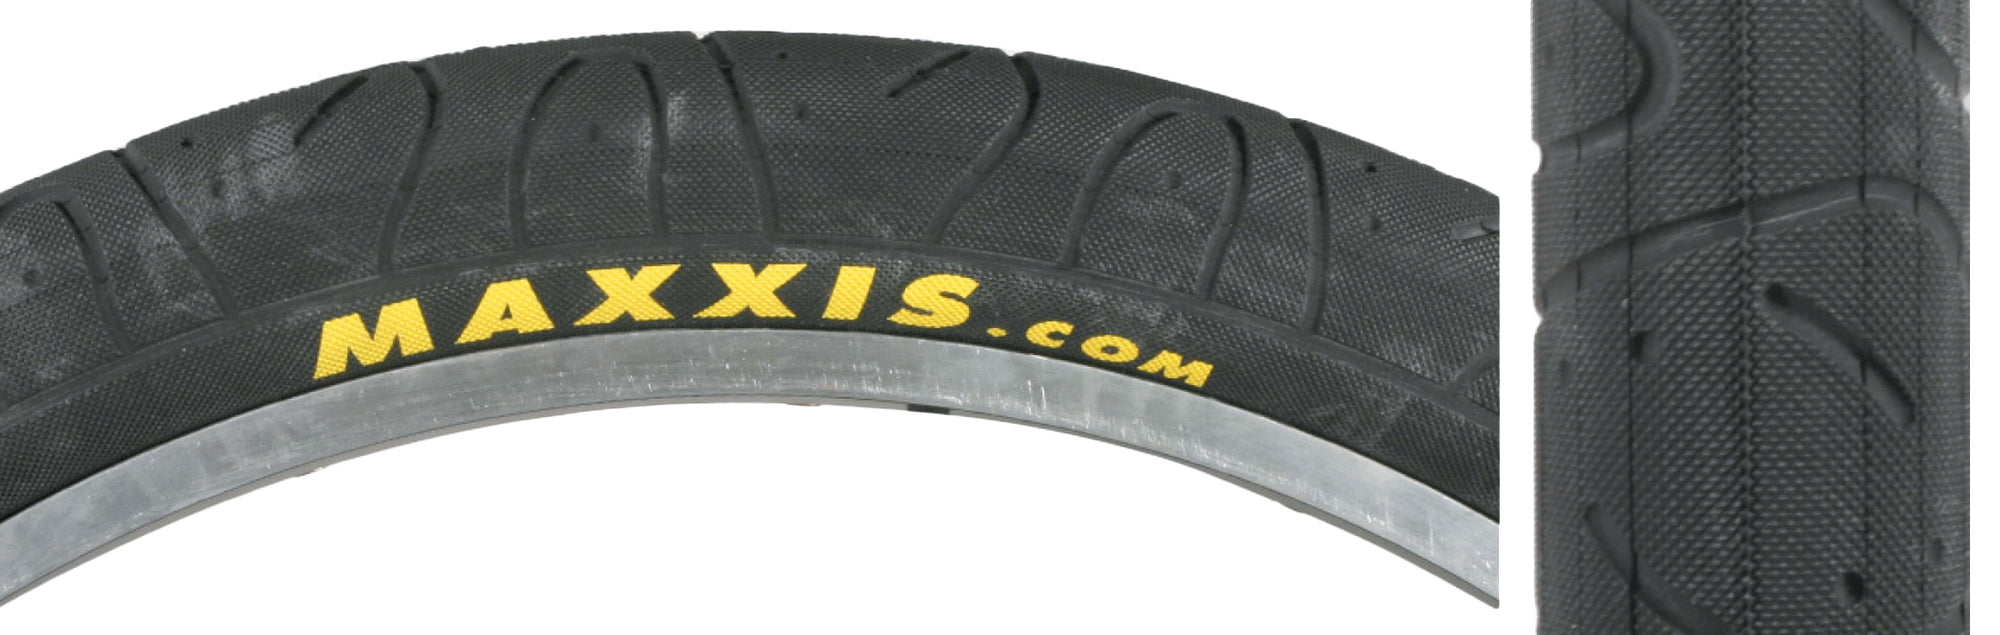 26x2.50 Maxxis Hookworm BMX/DJ/Freeride tire - Black